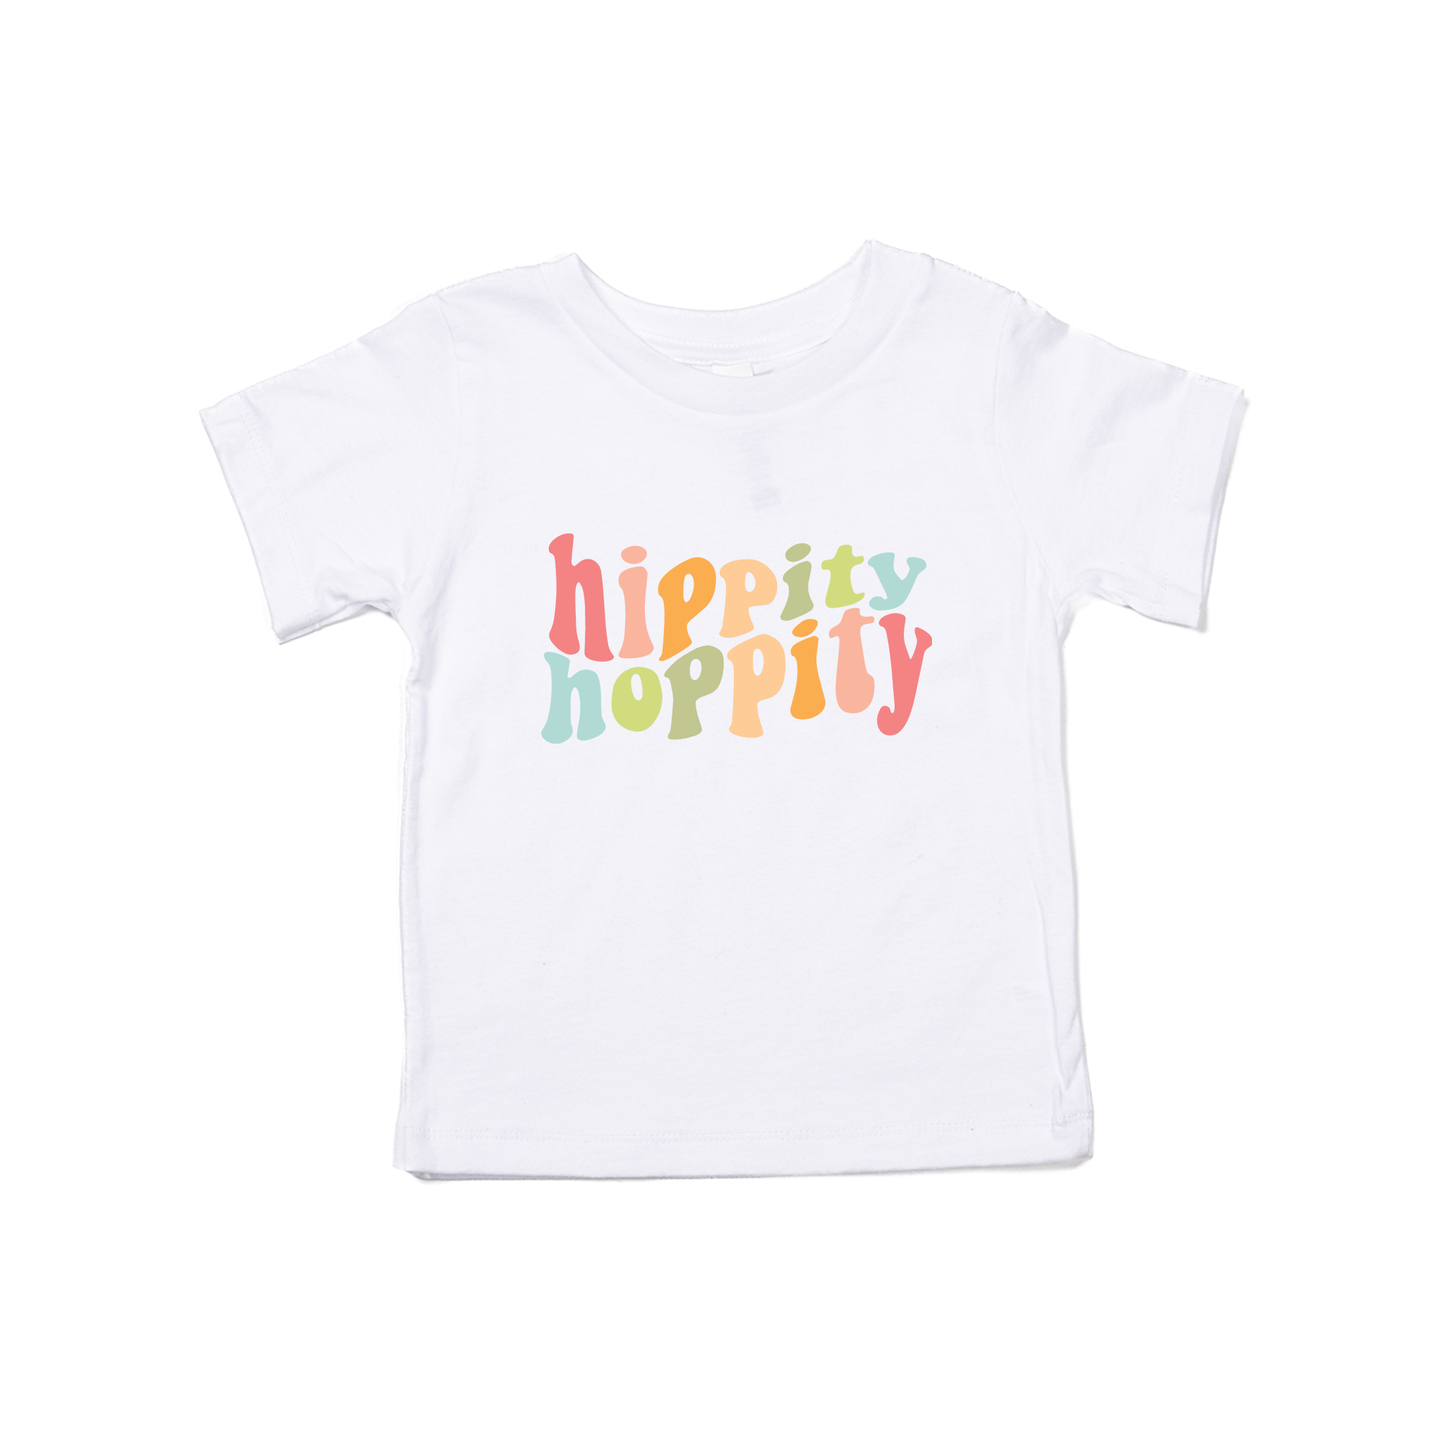 Hippity Hoppity - Kids Tee (White)